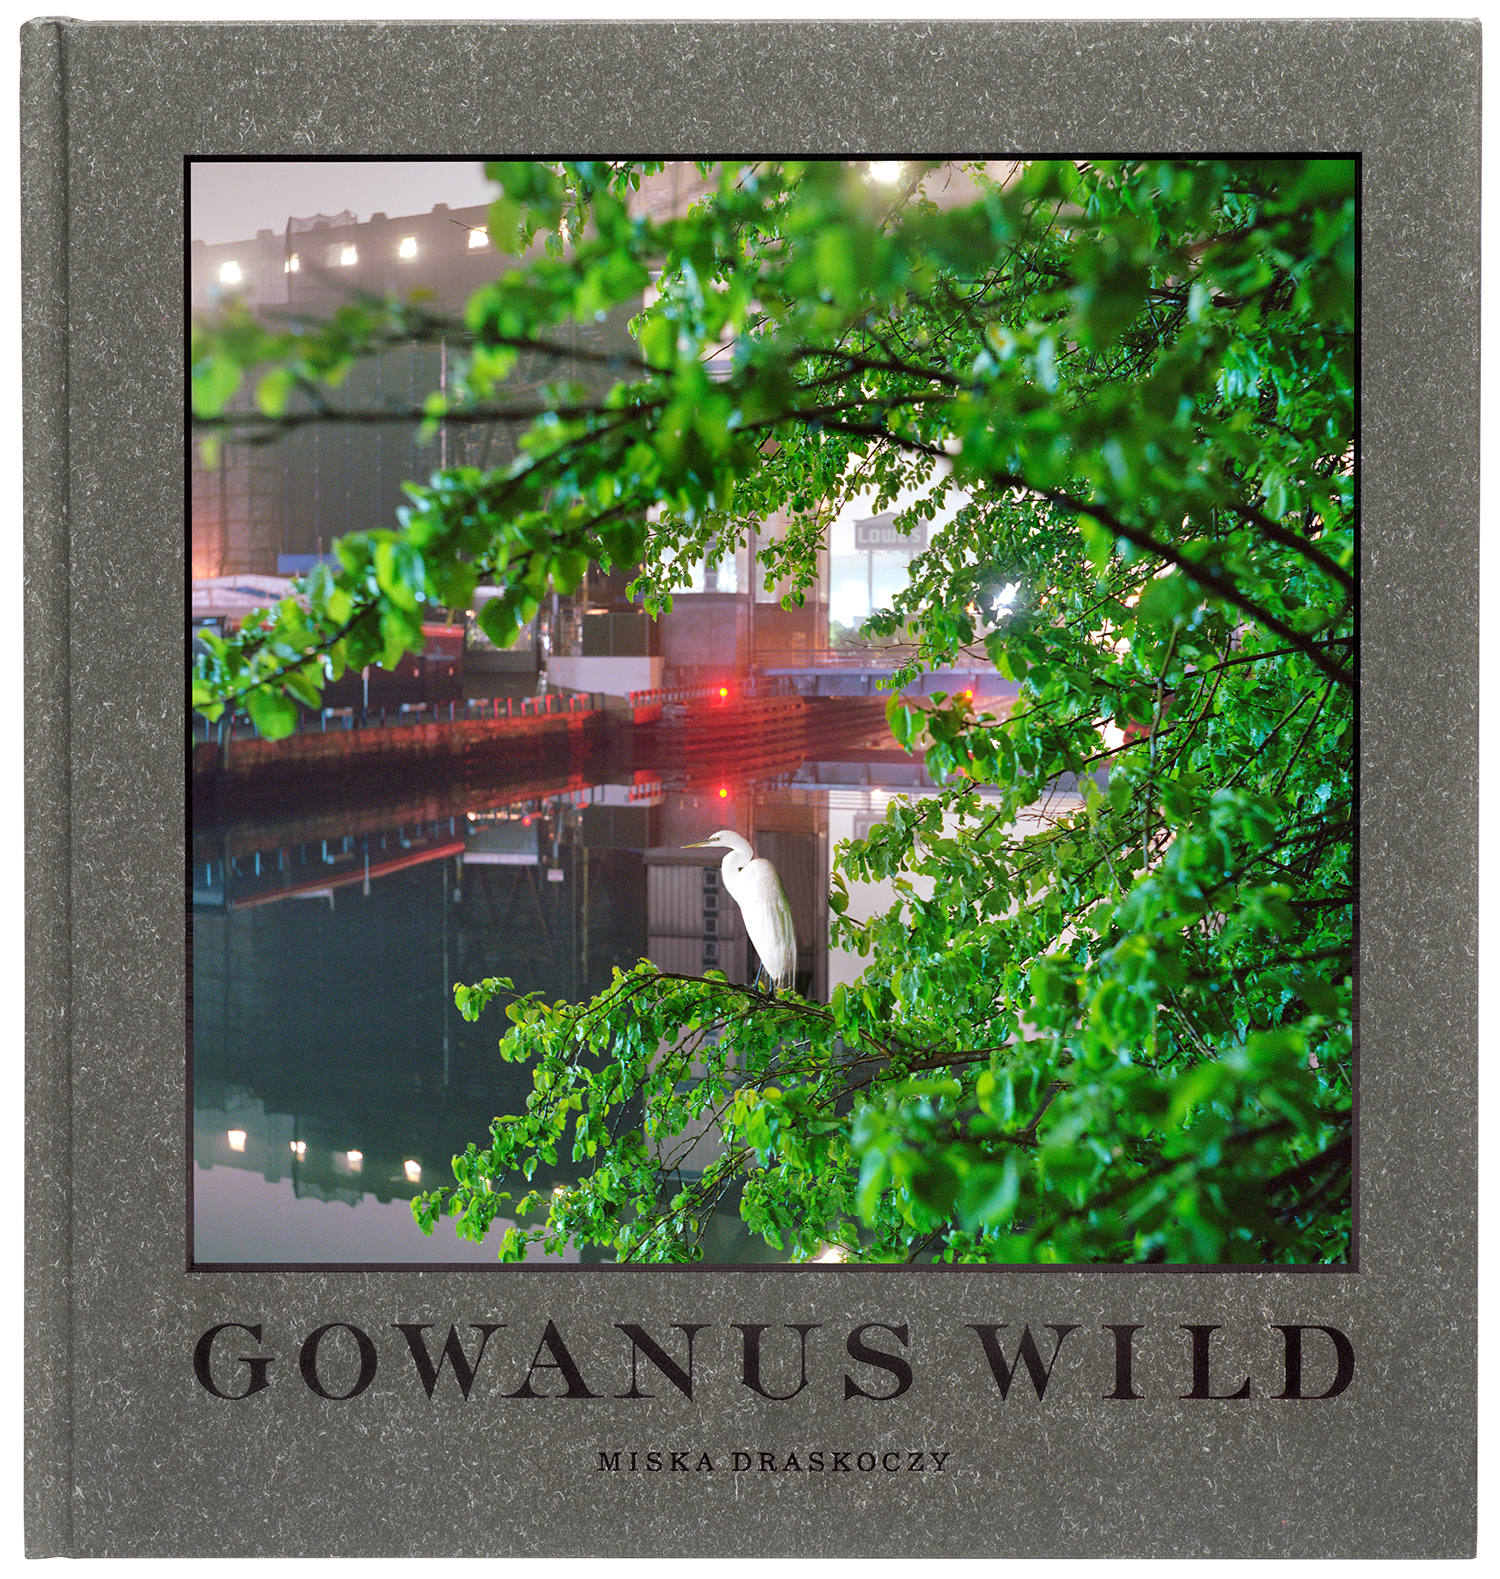 Gowanus_Wild_by_Miska_Draskoczy_flat_on_alpha_1500.png